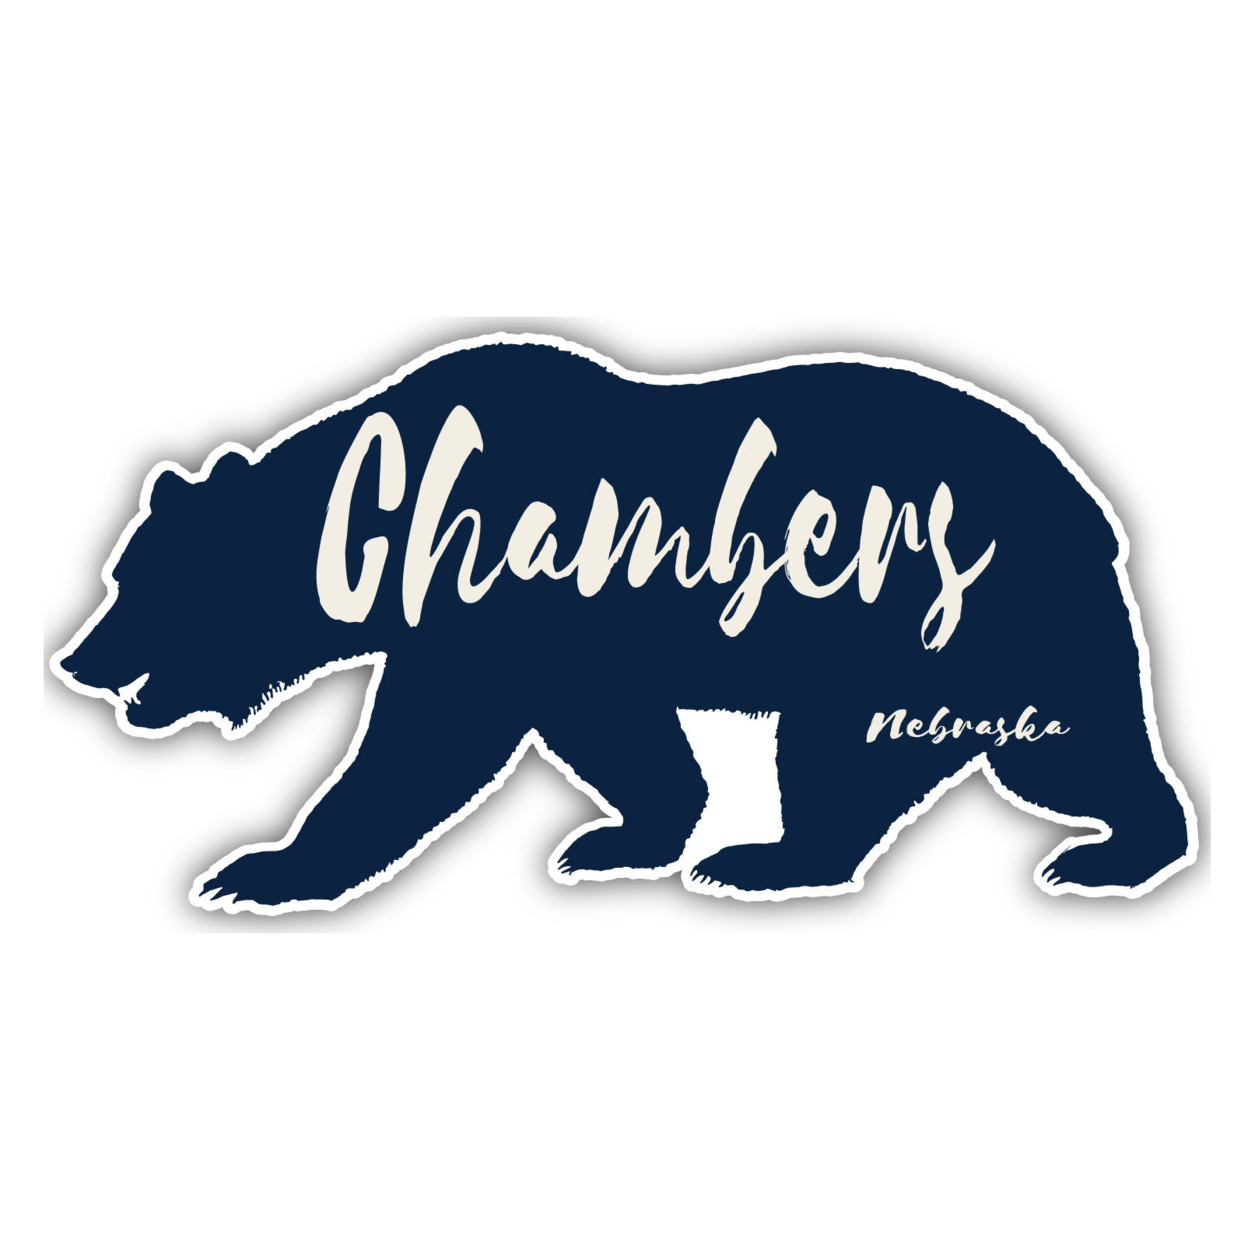 Chambers Nebraska Souvenir Decorative Stickers (Choose Theme And Size) - 4-Pack, 2-Inch, Bear